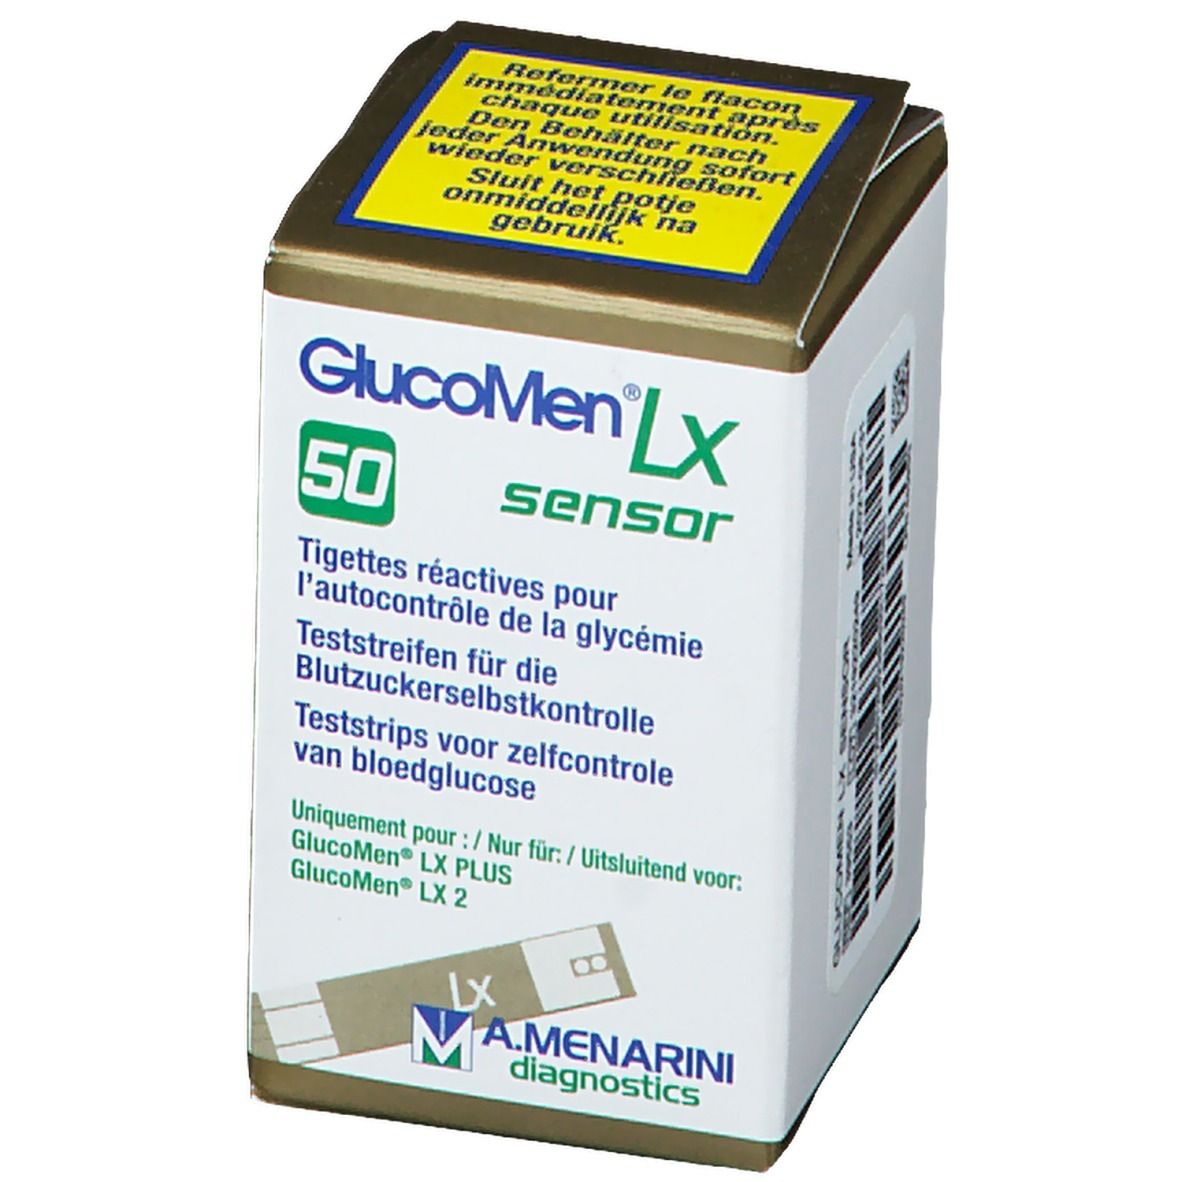 Glucomen® Lx Sensor